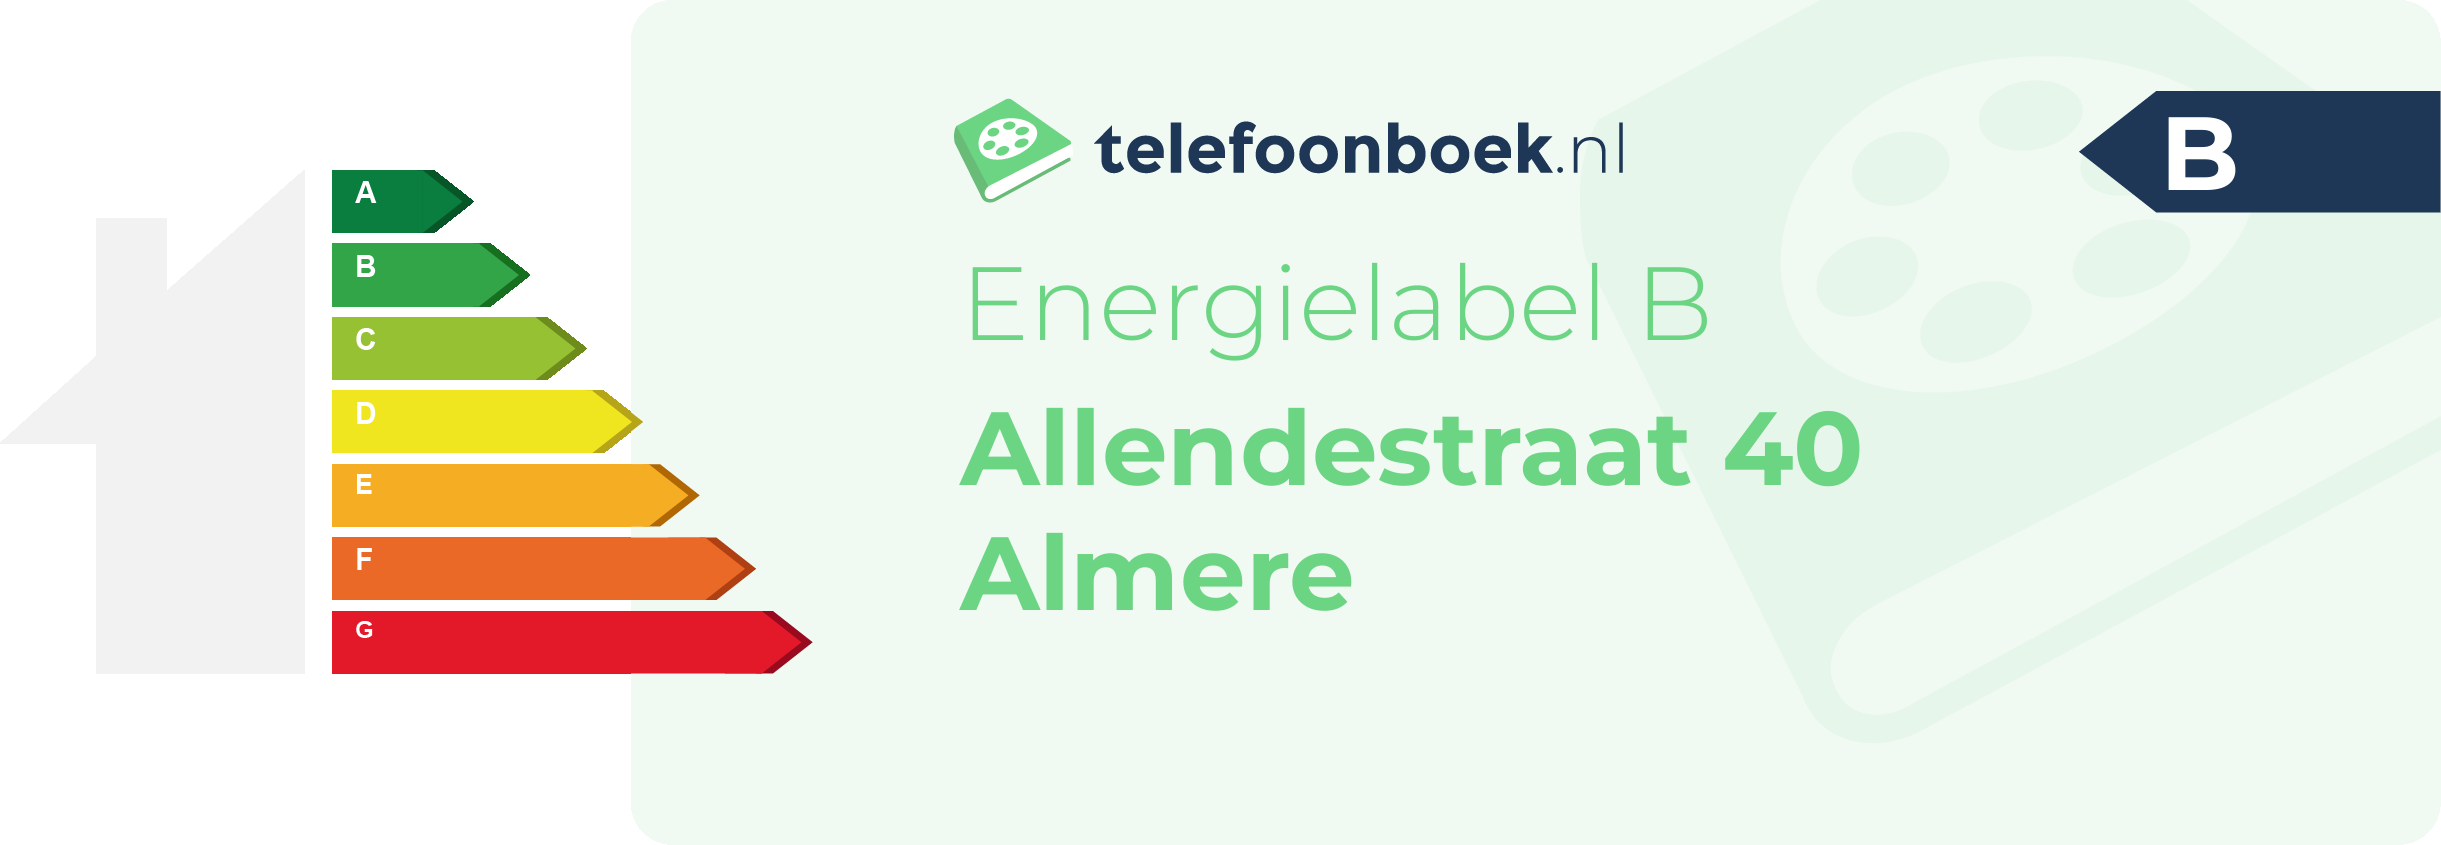 Energielabel Allendestraat 40 Almere